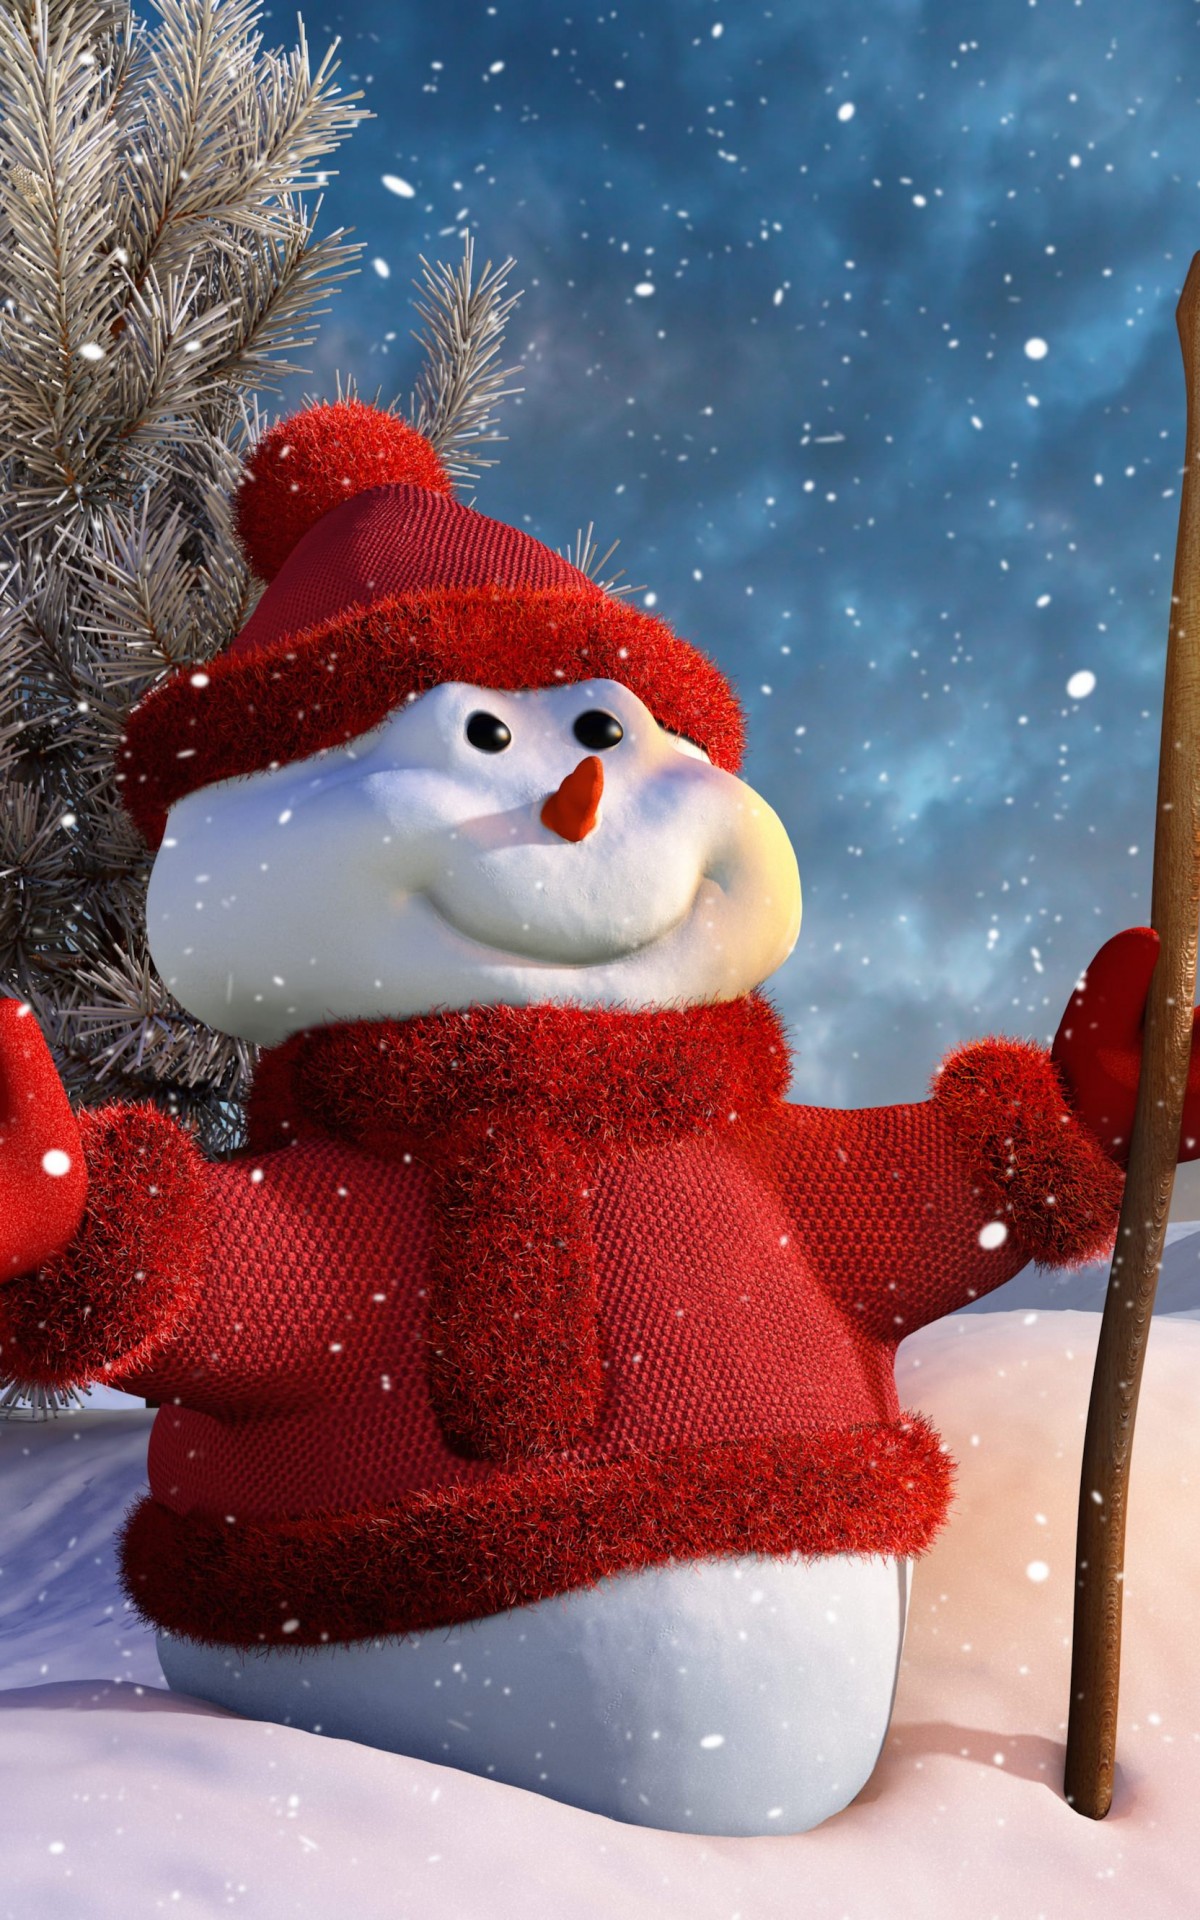 Christmas Snowman Wallpaper For Amazon Kindle Fire HDx